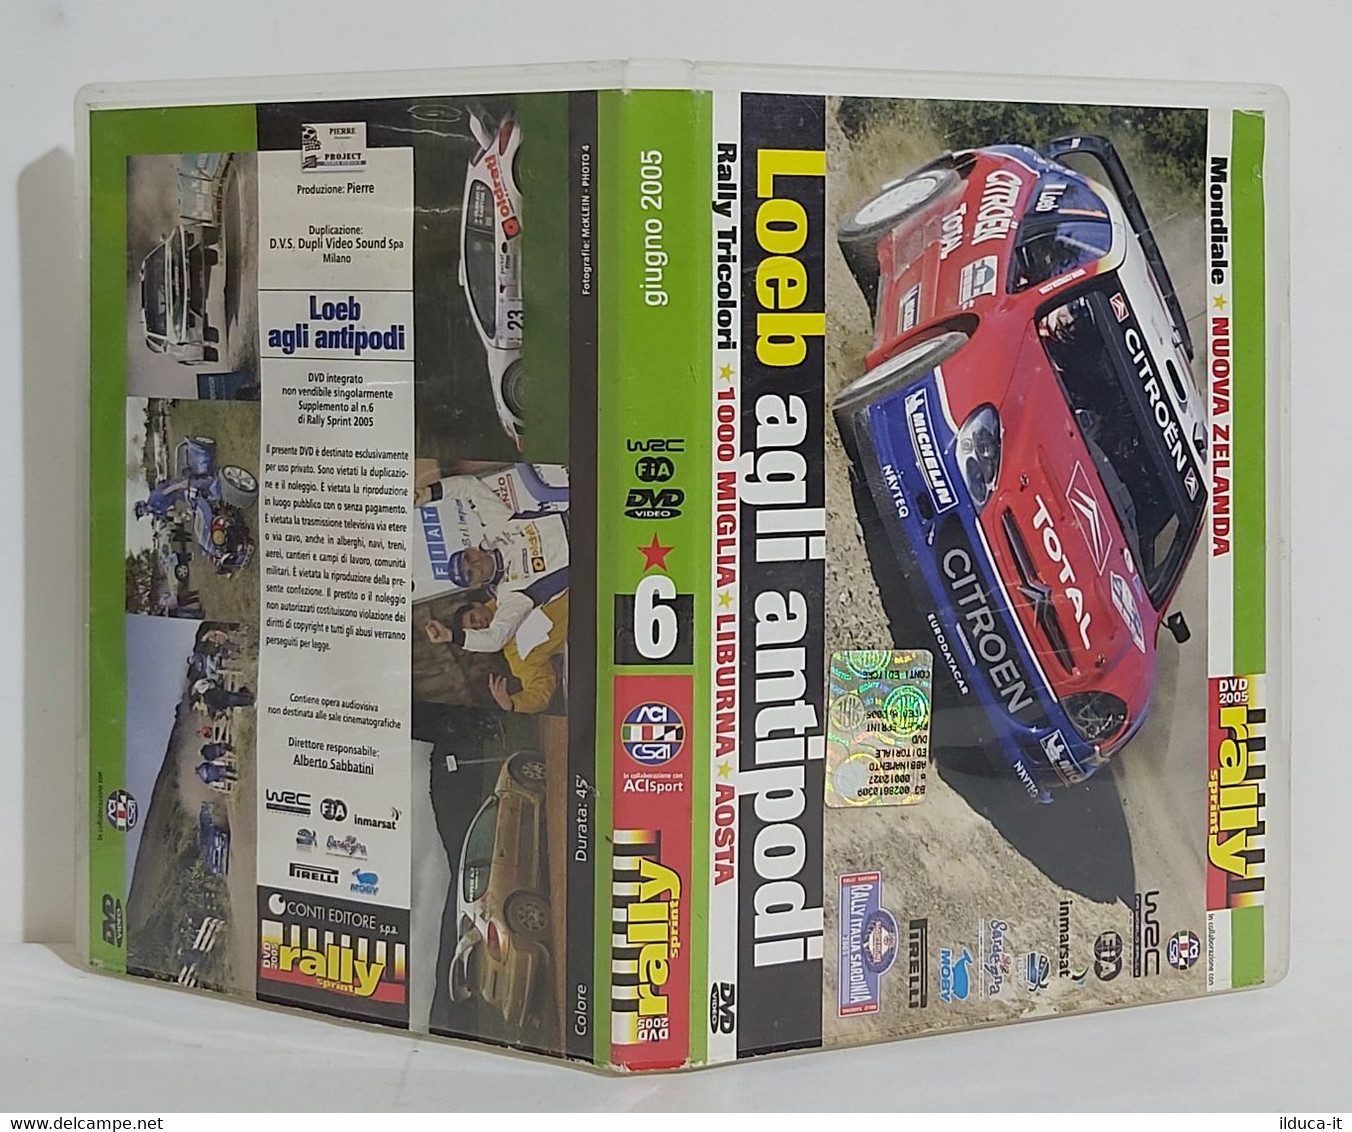 I101816 DVD - Rally Sprint Giugno 2005 N. 6 - Loeb Agli Antipodi - Sport